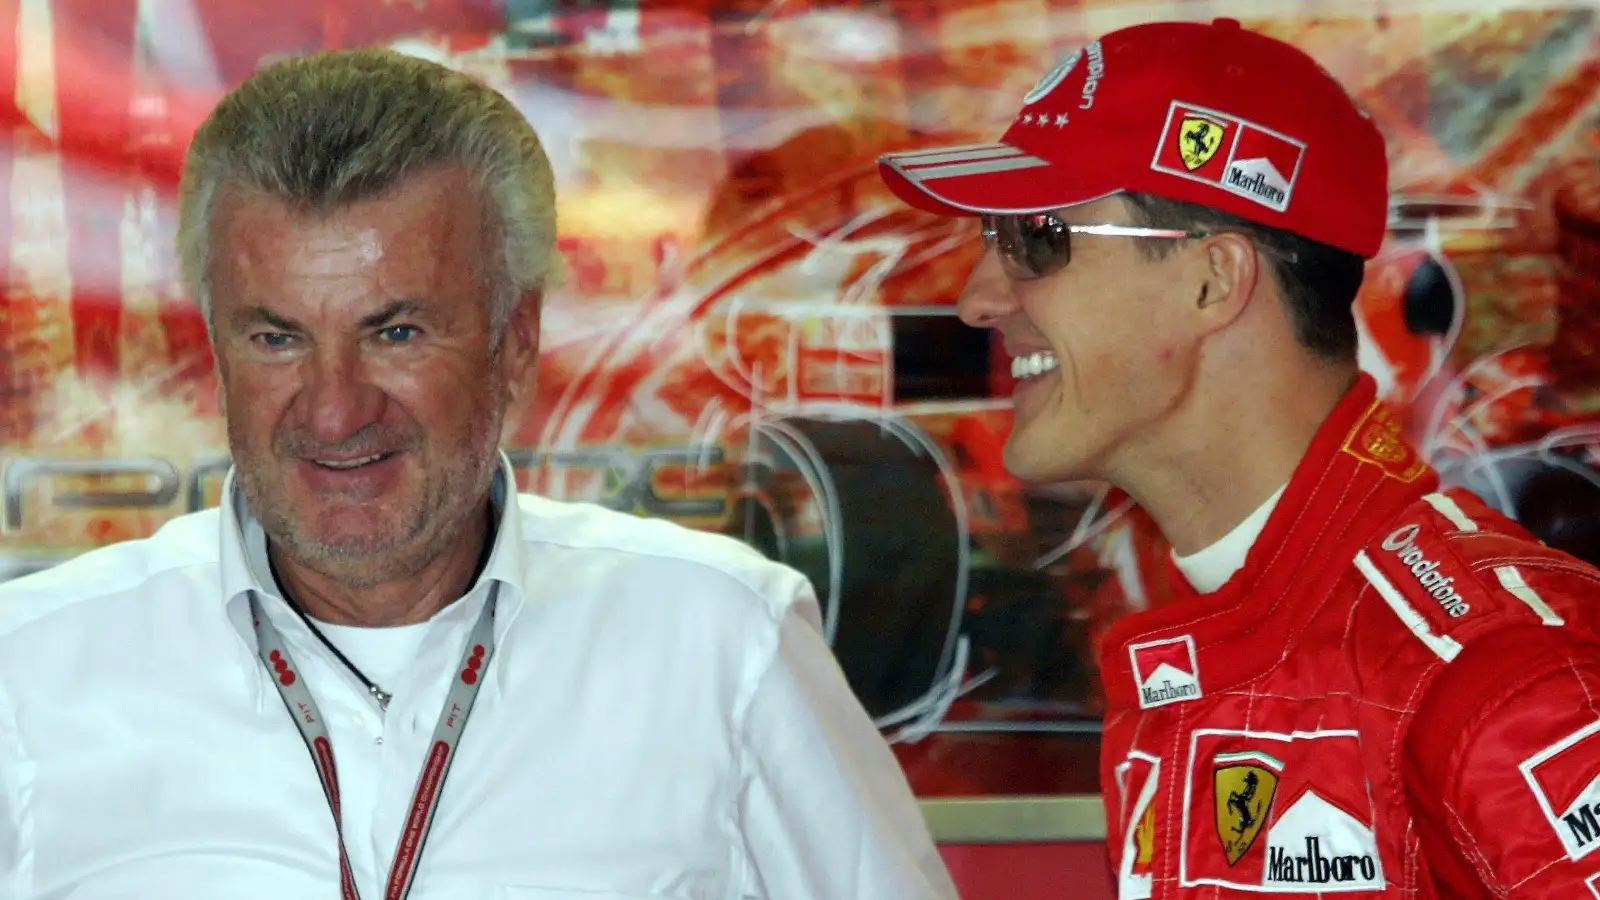 Willi Weber and Michael Schumacher